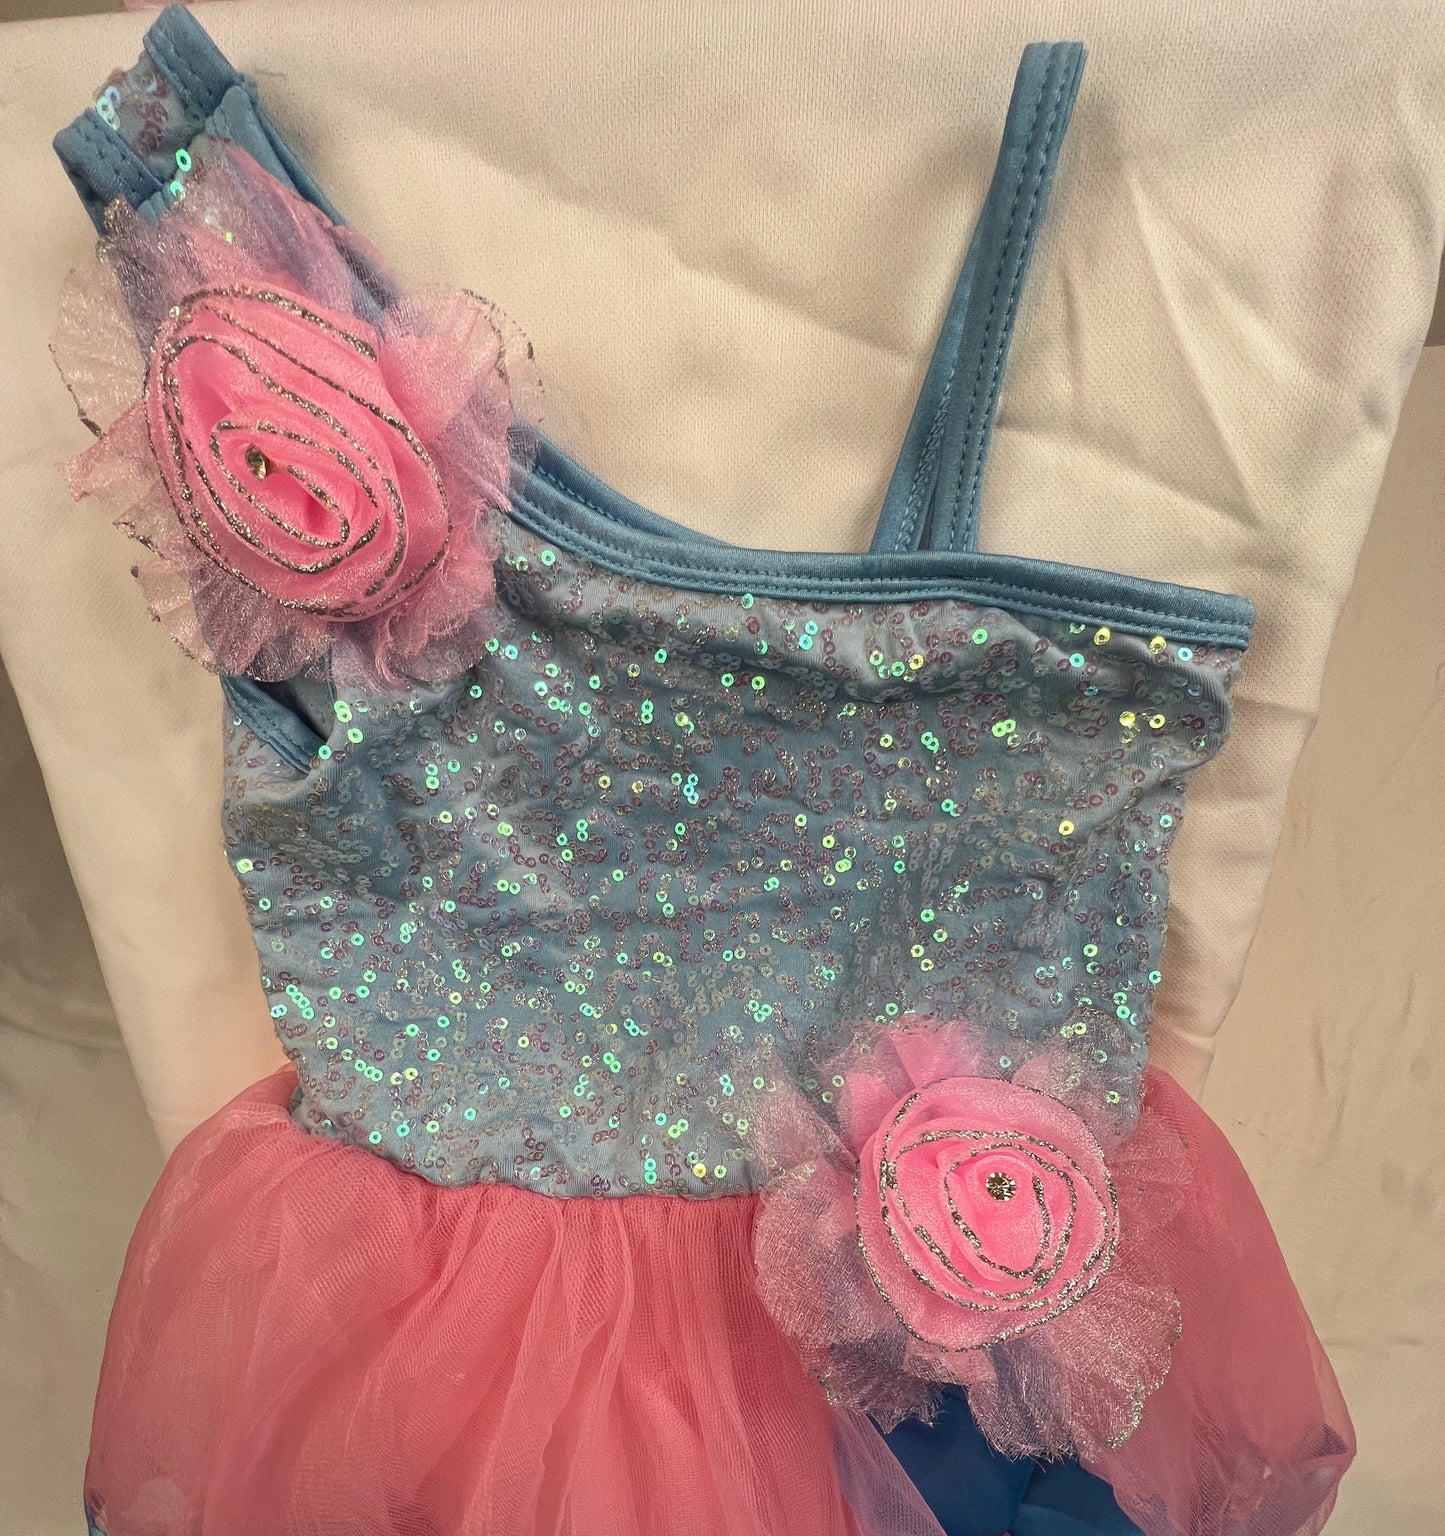 Girls XS Dress Up Ballerina Tutu Pink Blue Leotard EUC (Estimate about 2T - 3T) Costume Dress-up Dance